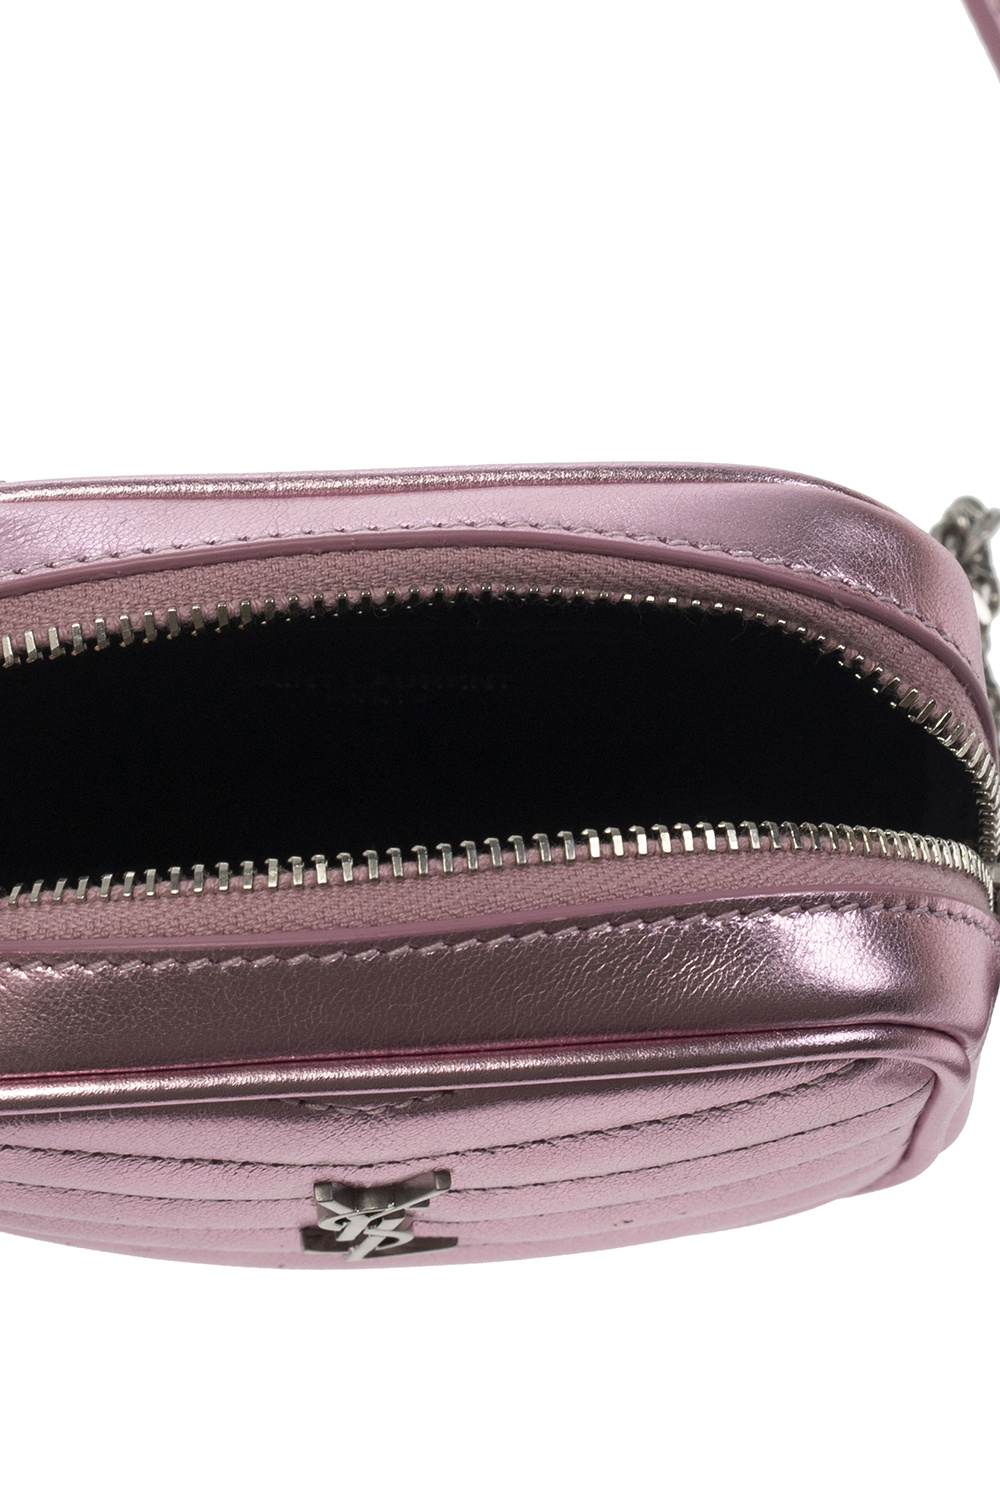 Saint Laurent Lou Quilted Leather Belt Bag in Purple